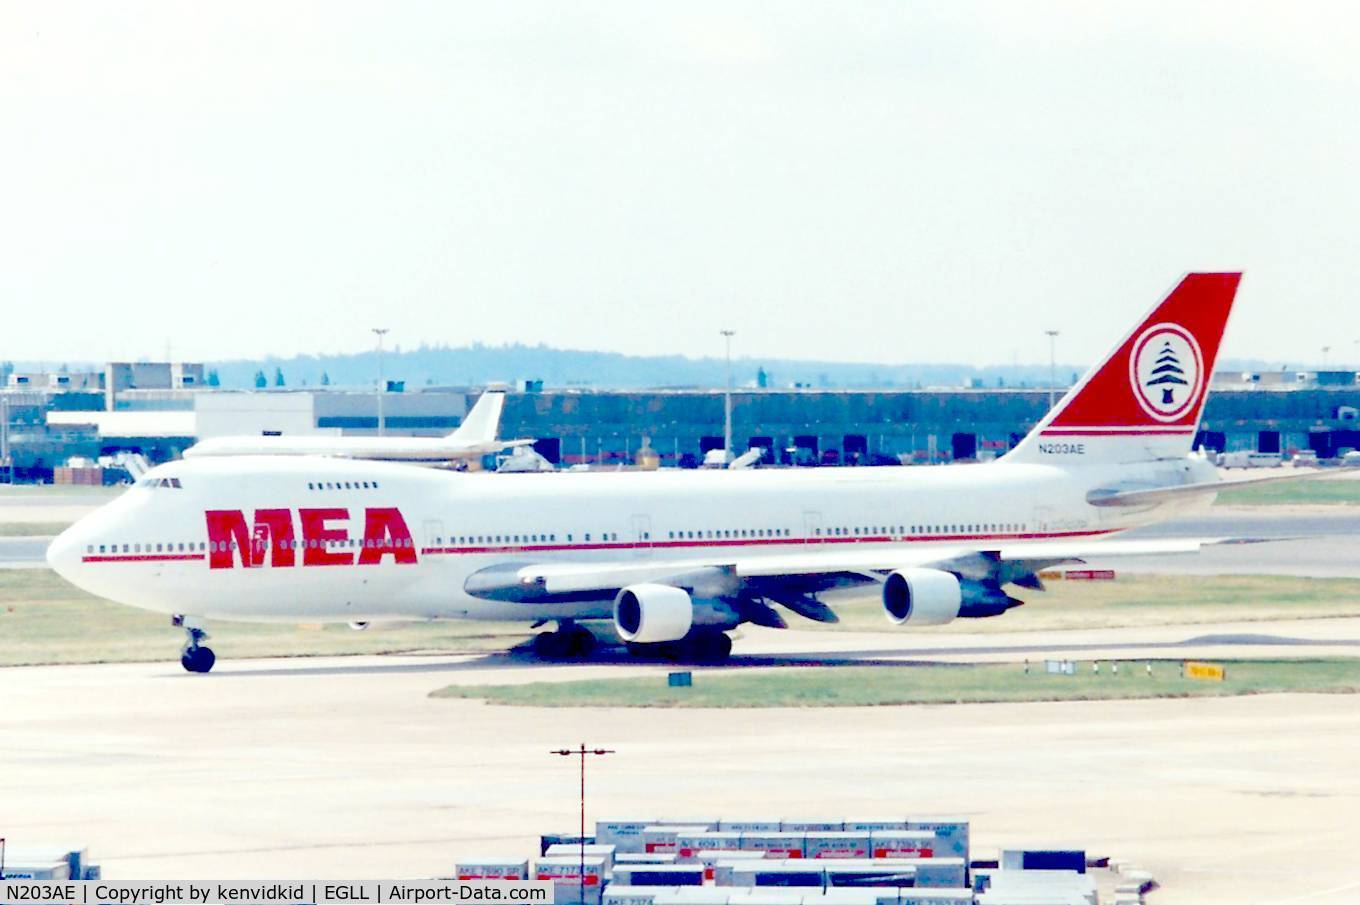 N203AE, 1975 Boeing 747-2B4B C/N 21098, At London Heathrow, early 1990's.